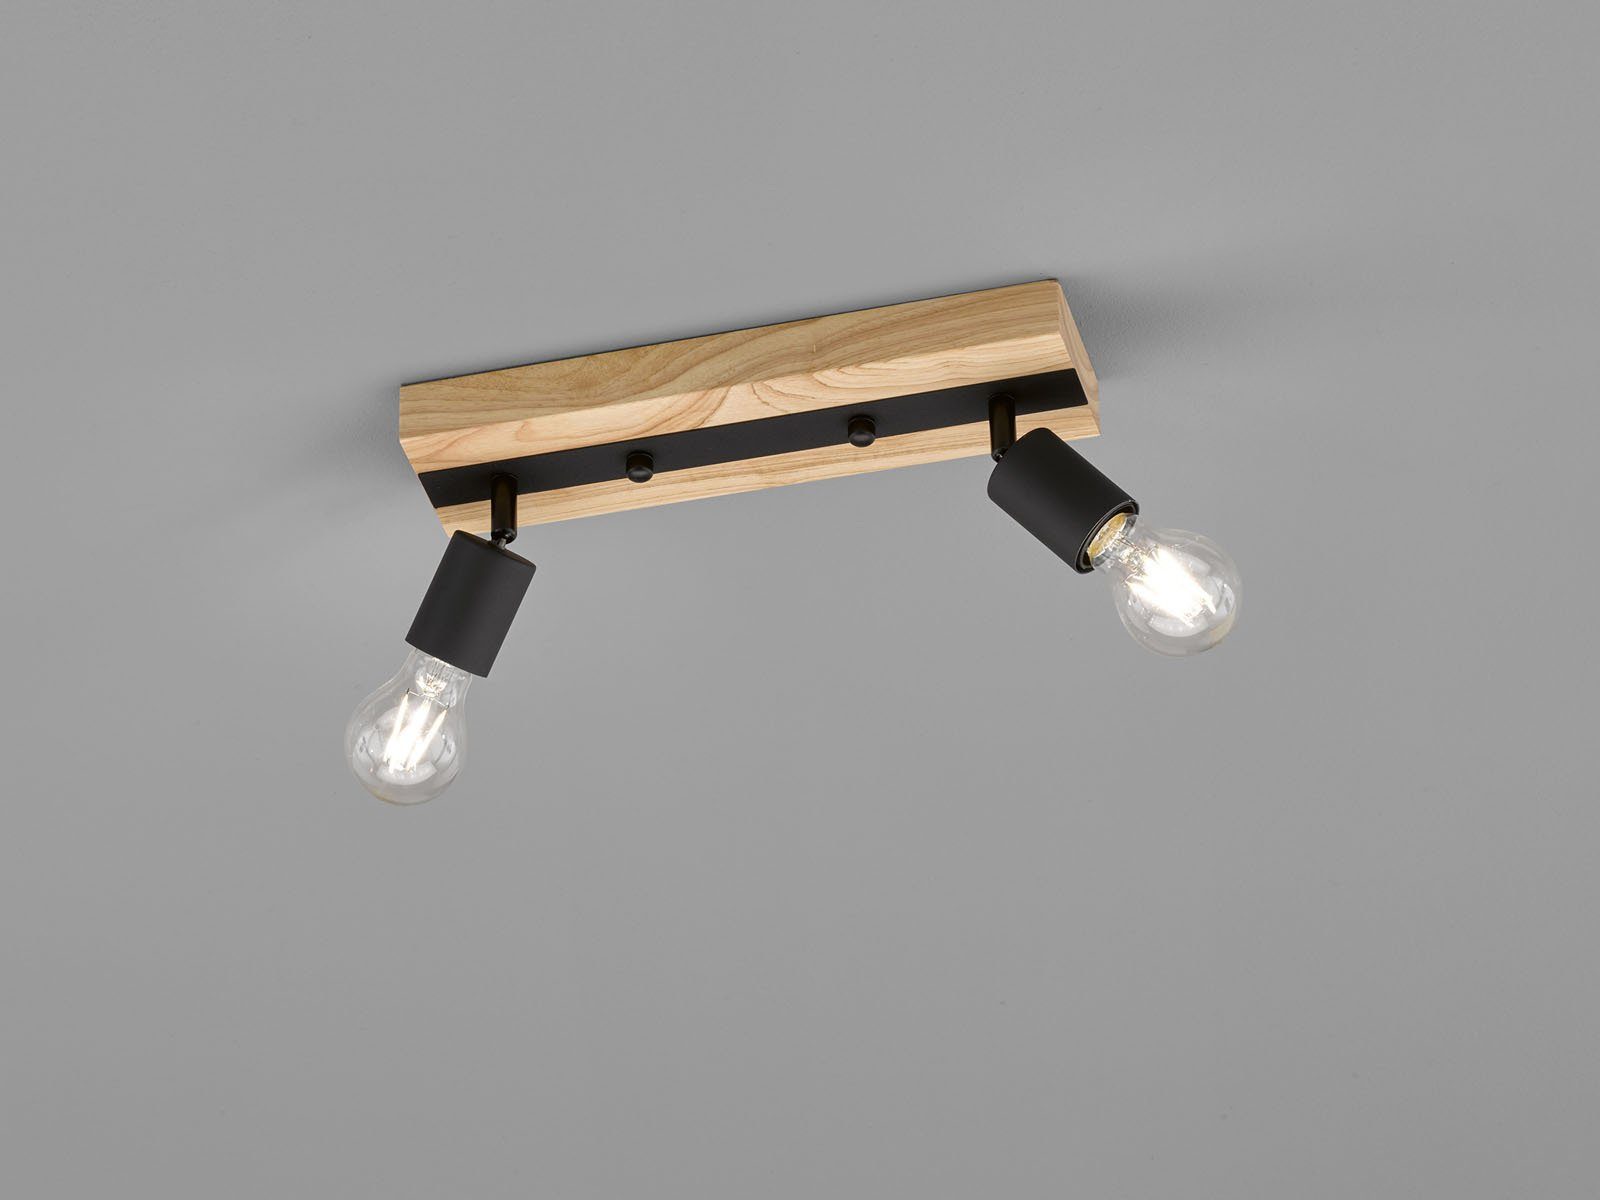 mit Deckenlampe Holz-lampe 2-flammig Dimmfunktion, LED Warmweiß, LED Deckenstrahler, 33cm B: Strahler wechselbar, Holzbalken easy! FHL innen